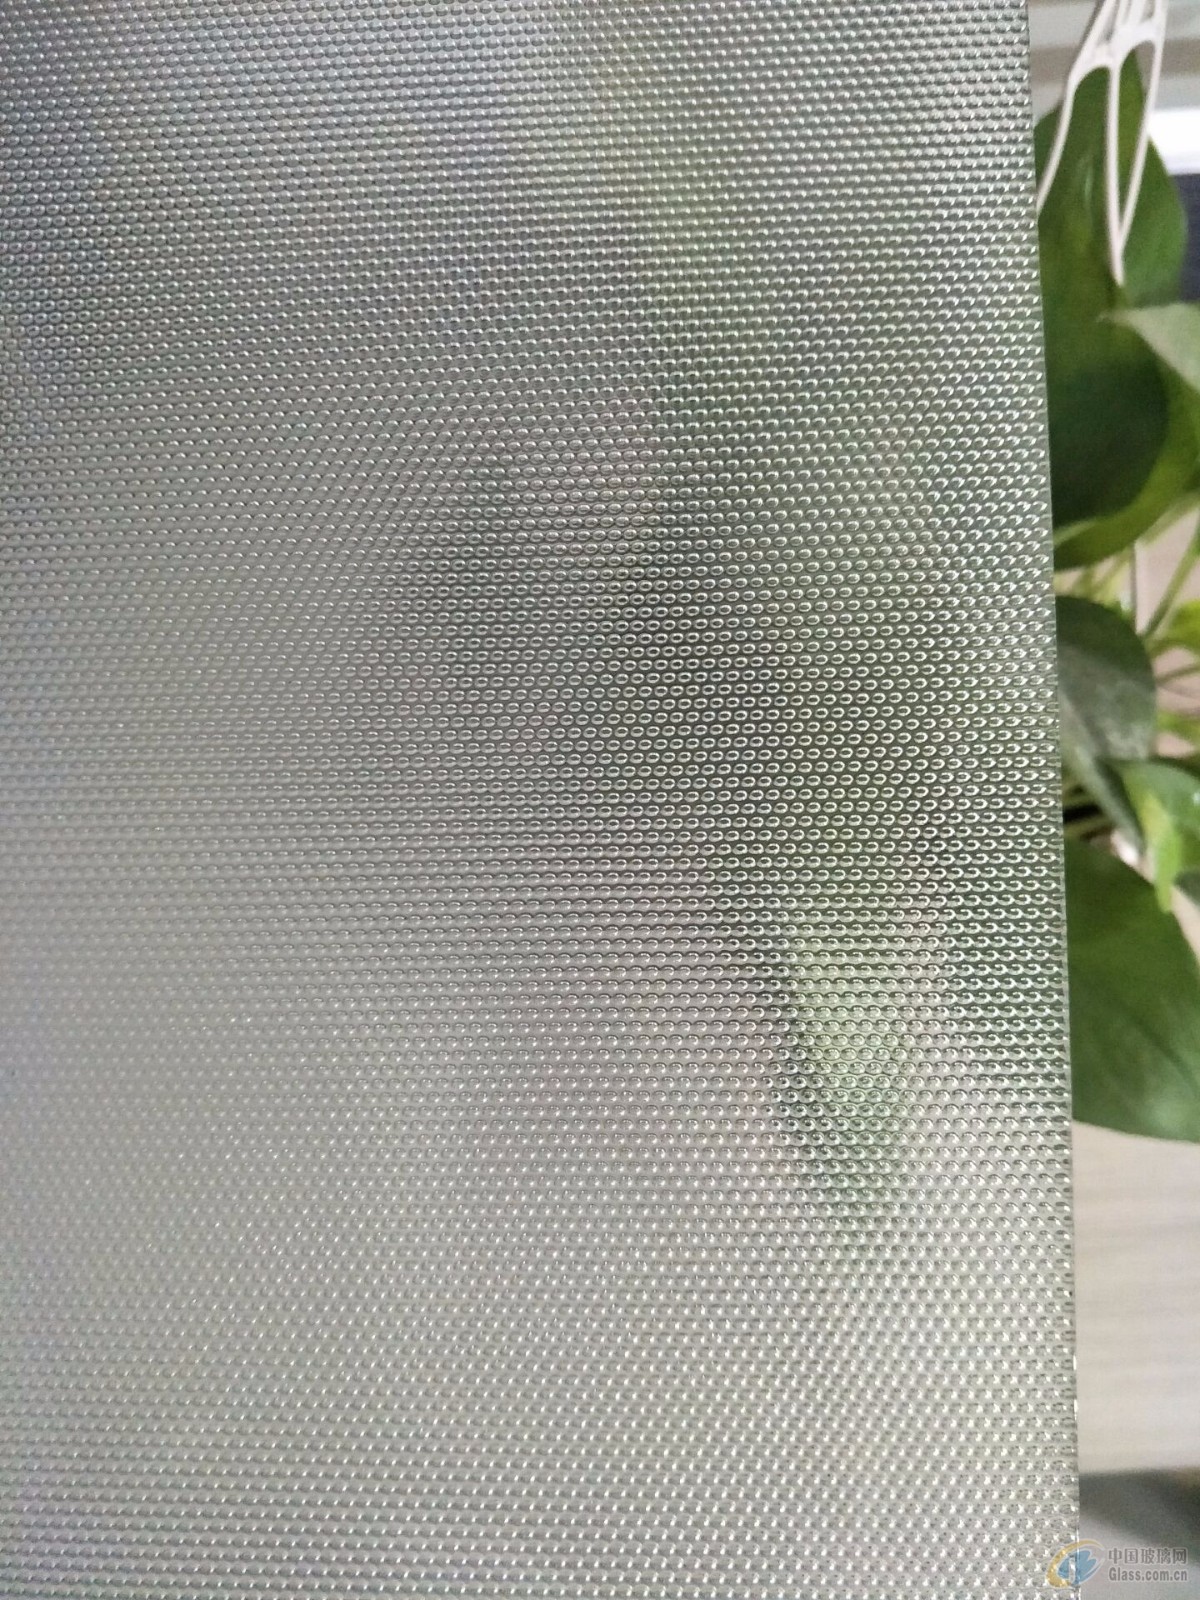 Textured glass Cloth glass.jpg